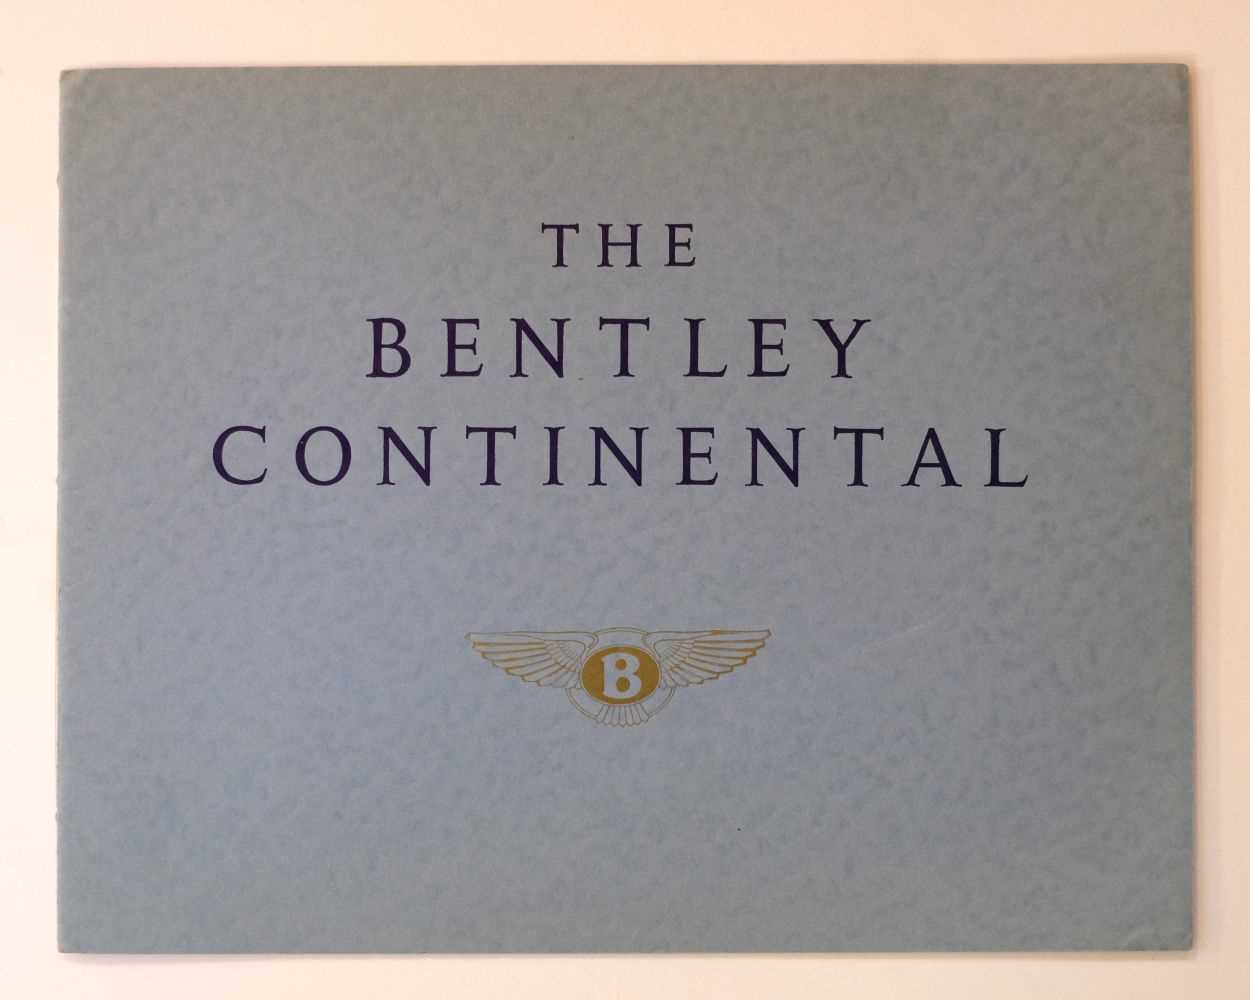 Lot 16 - Bentley. The Bentley Continental sales brochure, circa 1957